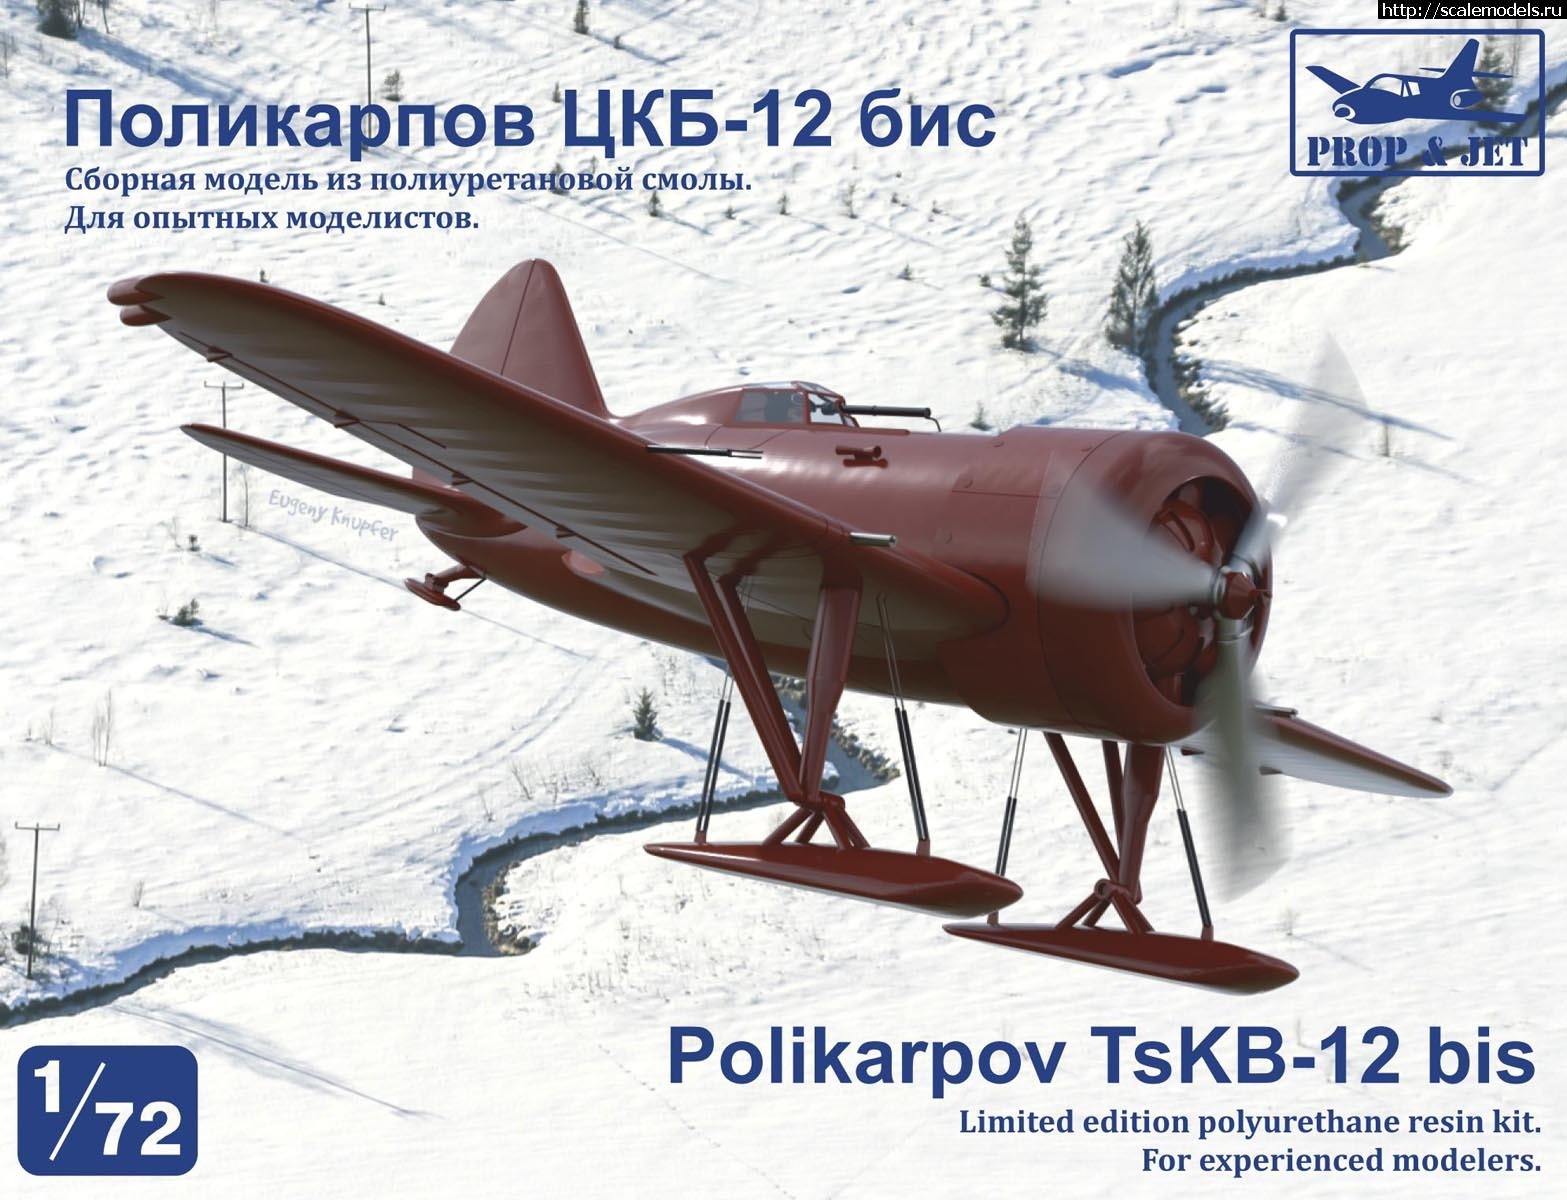 1708454791_korobka-ckb-12bis.jpg : #1820367/ -12 1/72 Prop&jet !  